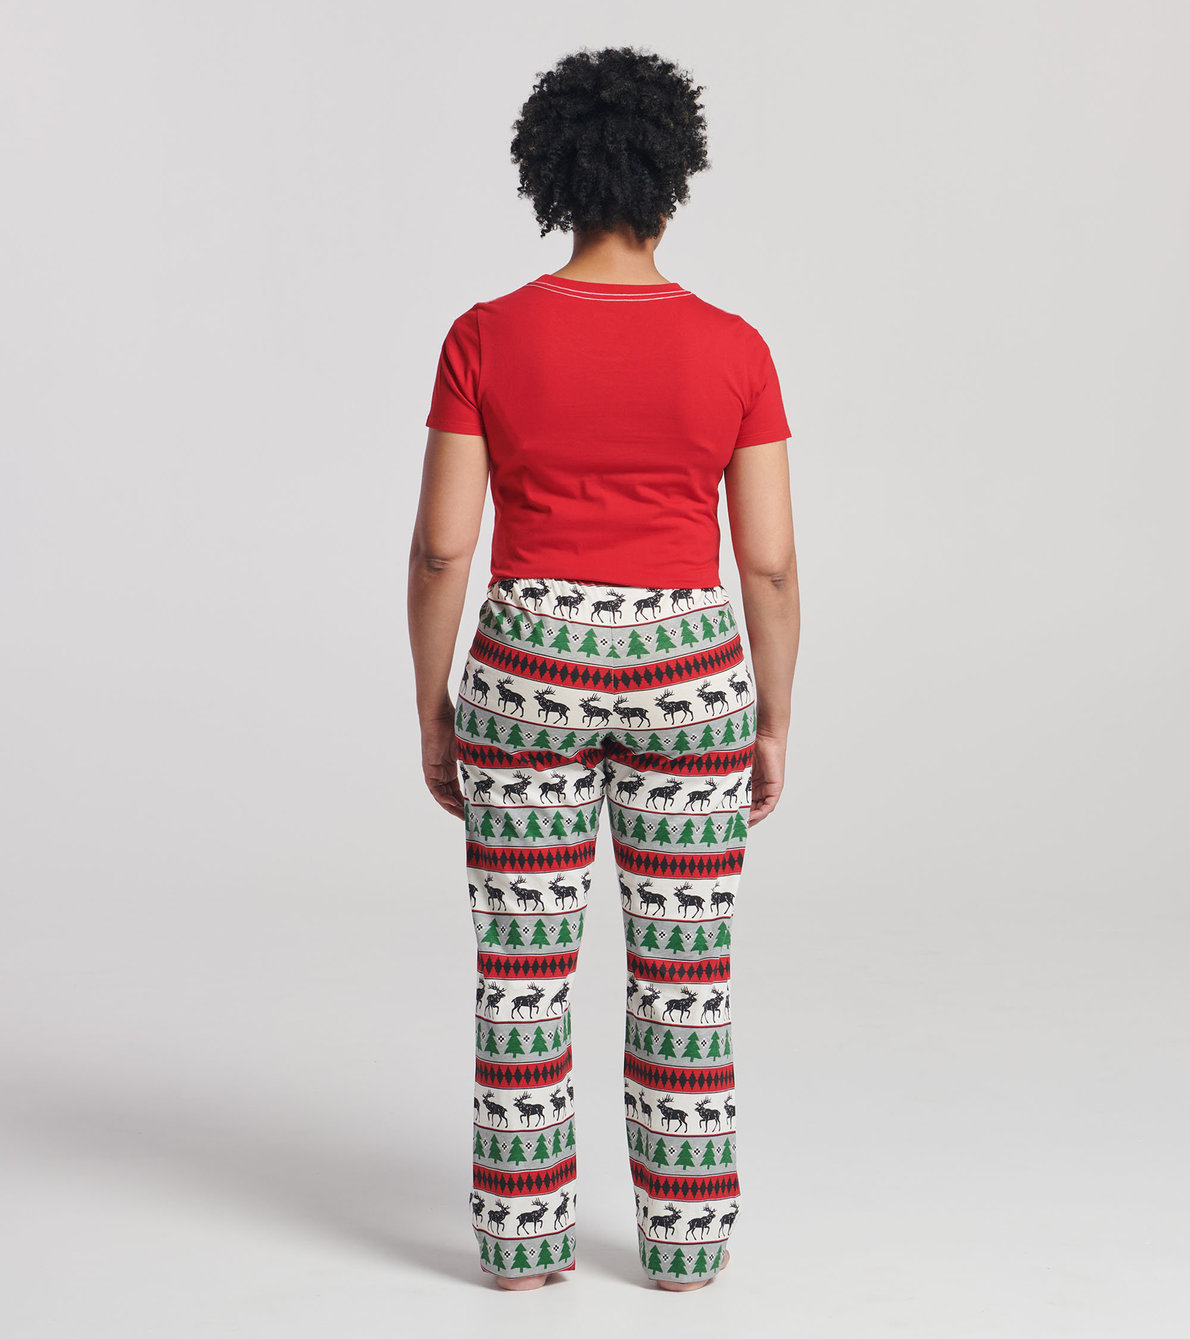 View larger image of Elk Fair Isle Women's Tee and Pants Pajama Separates